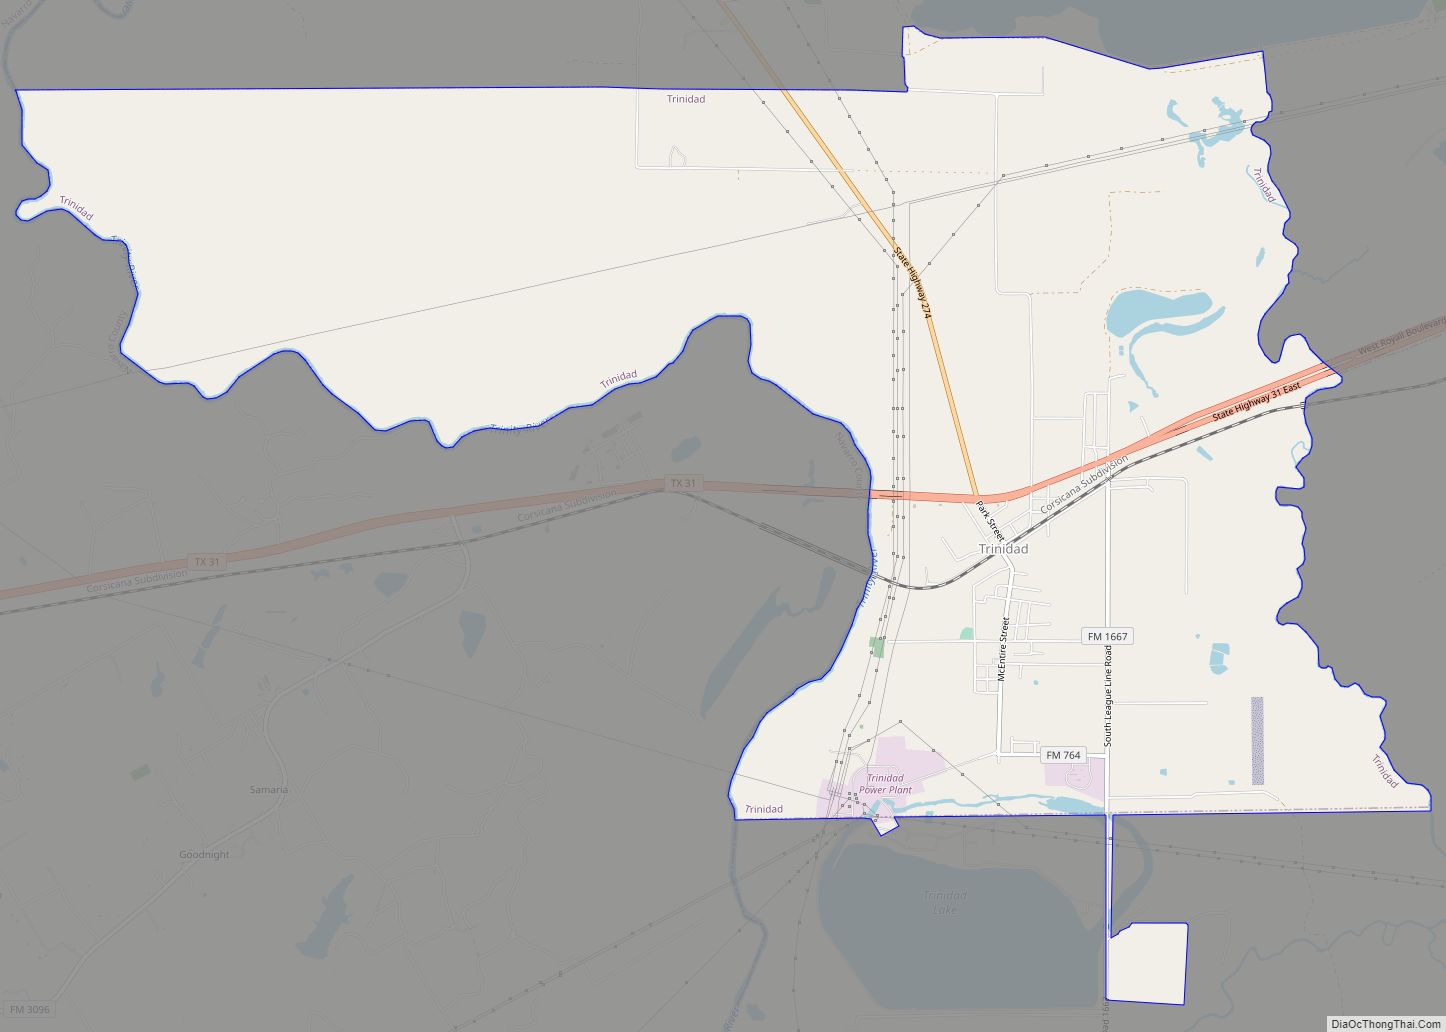 Map of Trinidad city, Texas